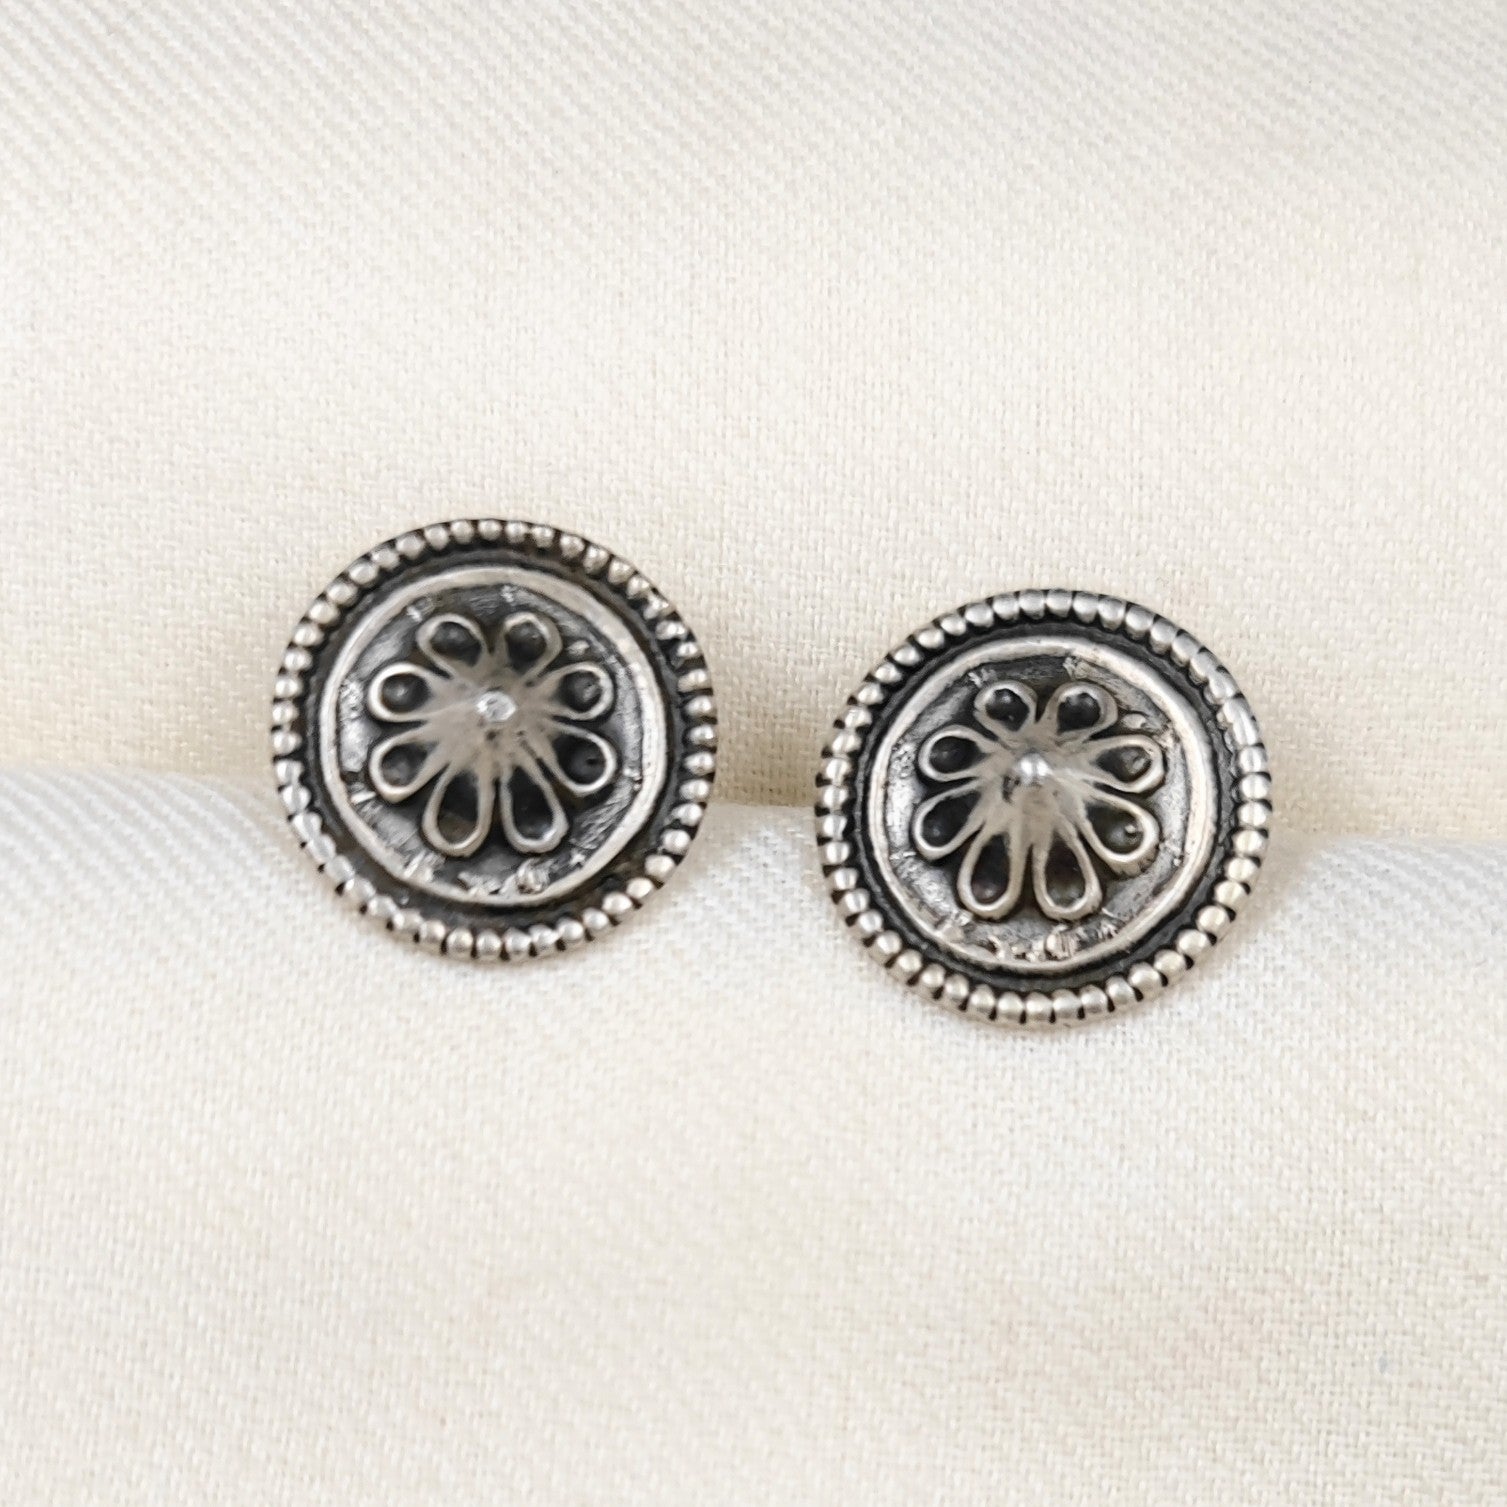 Silver Jewelry Earrings by Jauhri 92.5 Silver - Kawach Studs